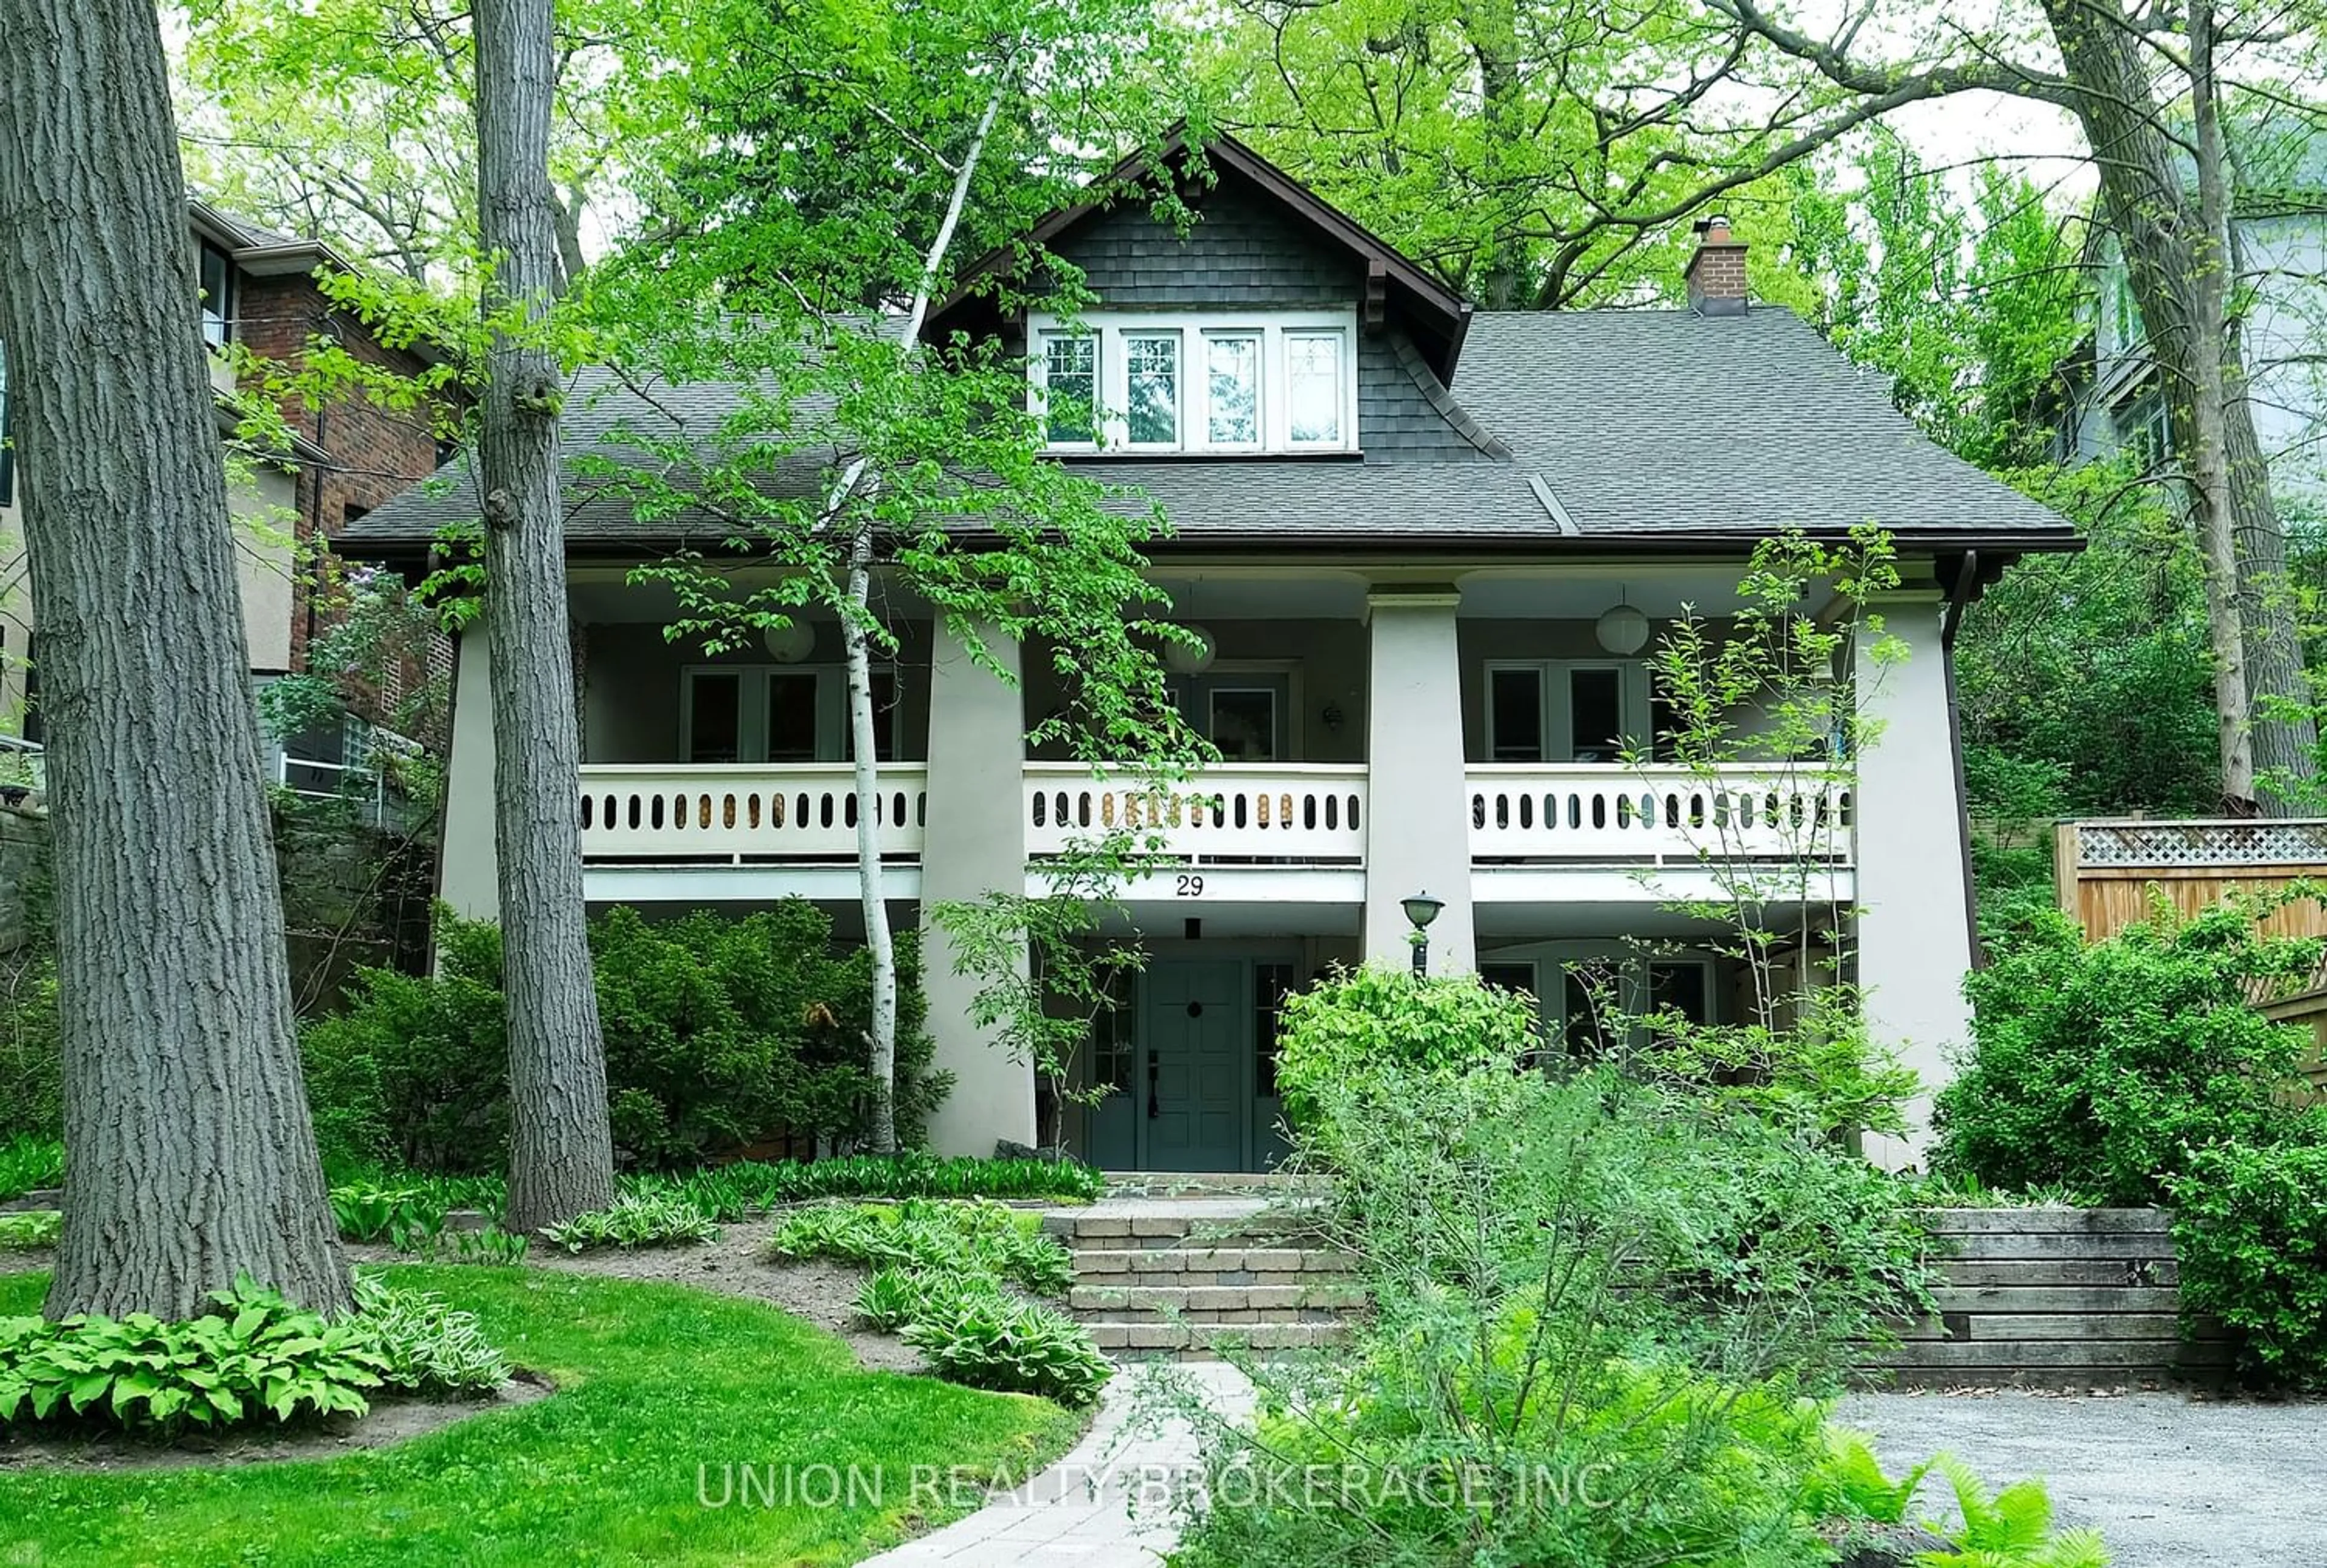 Cottage for 29 Pine Cres, Toronto Ontario M4E 1L3